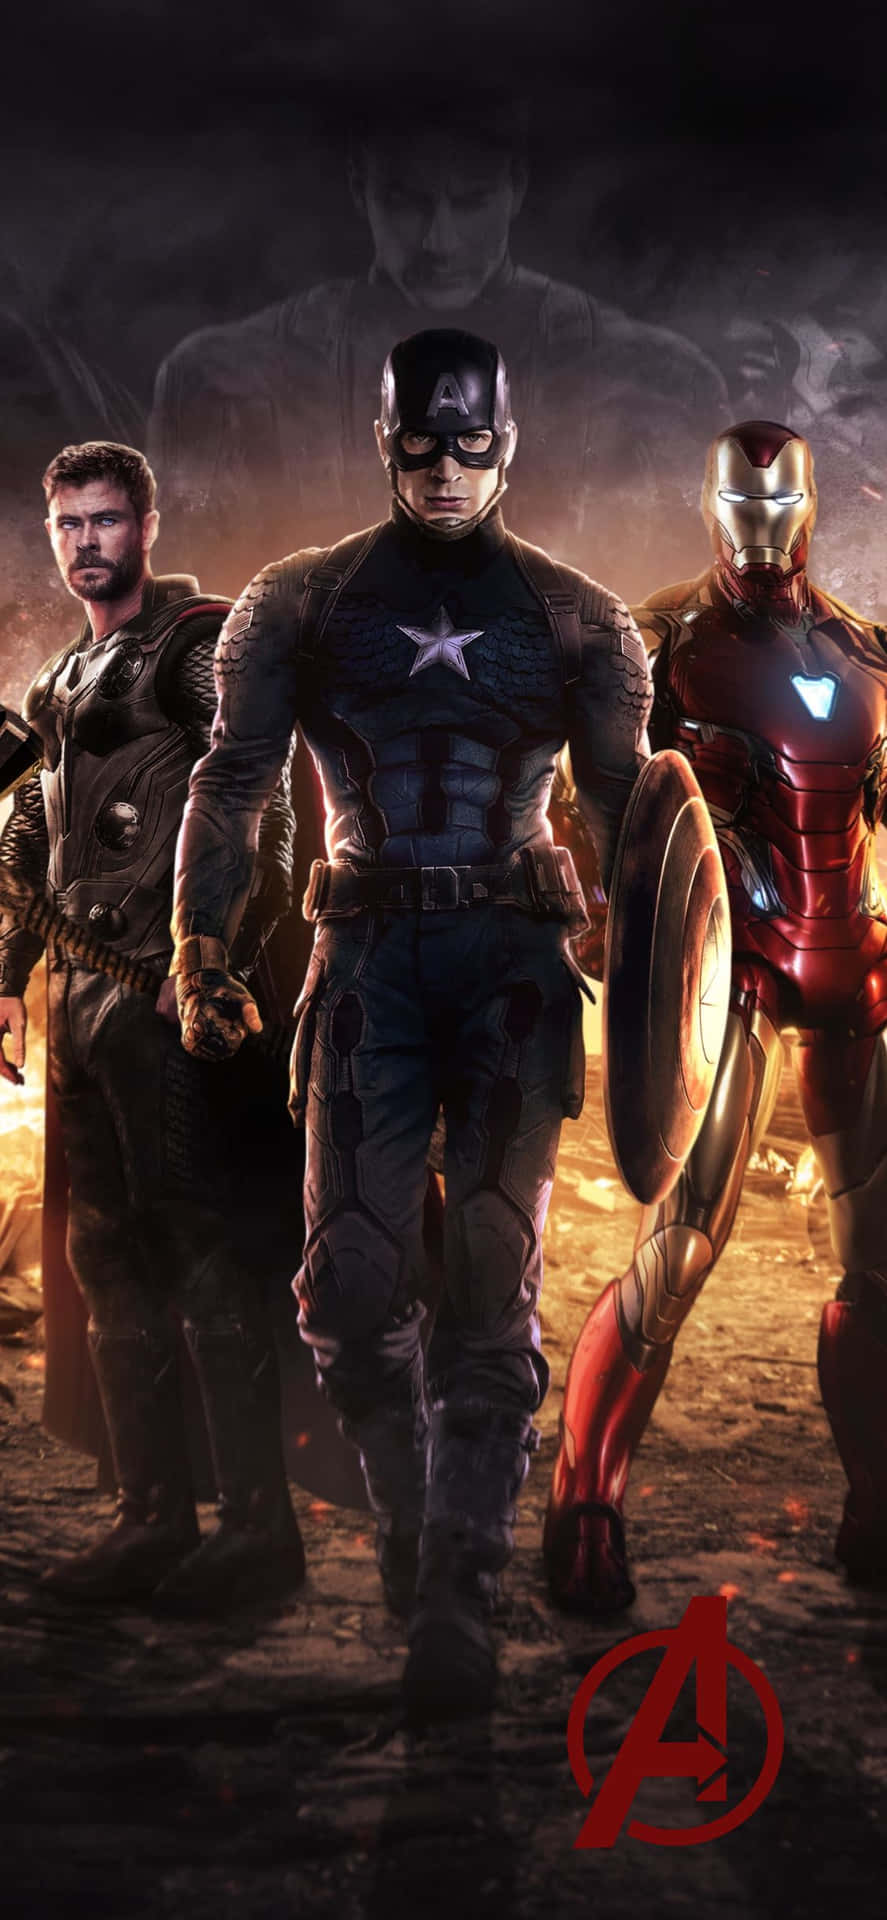 Fondode Pantalla De Avengers Para Iphone Xs Con Los Tres Superhéroes Principales.